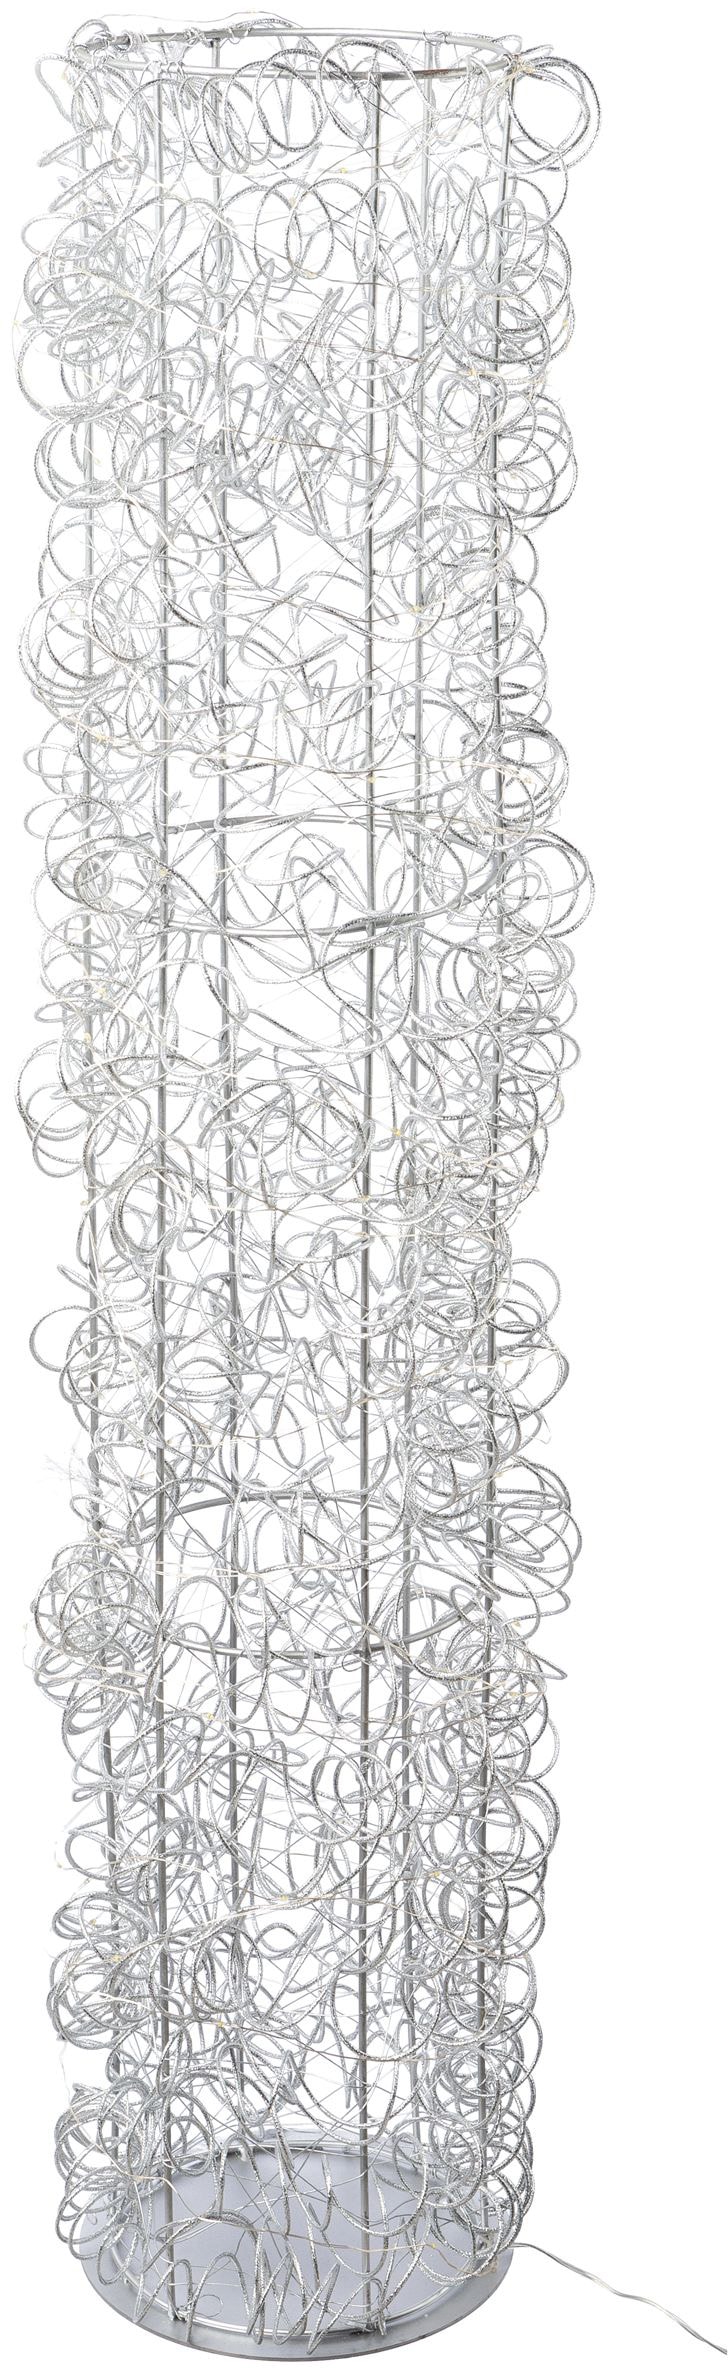 Creativ light Dekoobjekt "Metalldraht-Tower", Zylinder aus Draht, mit Timerfunktion, USB Kabel